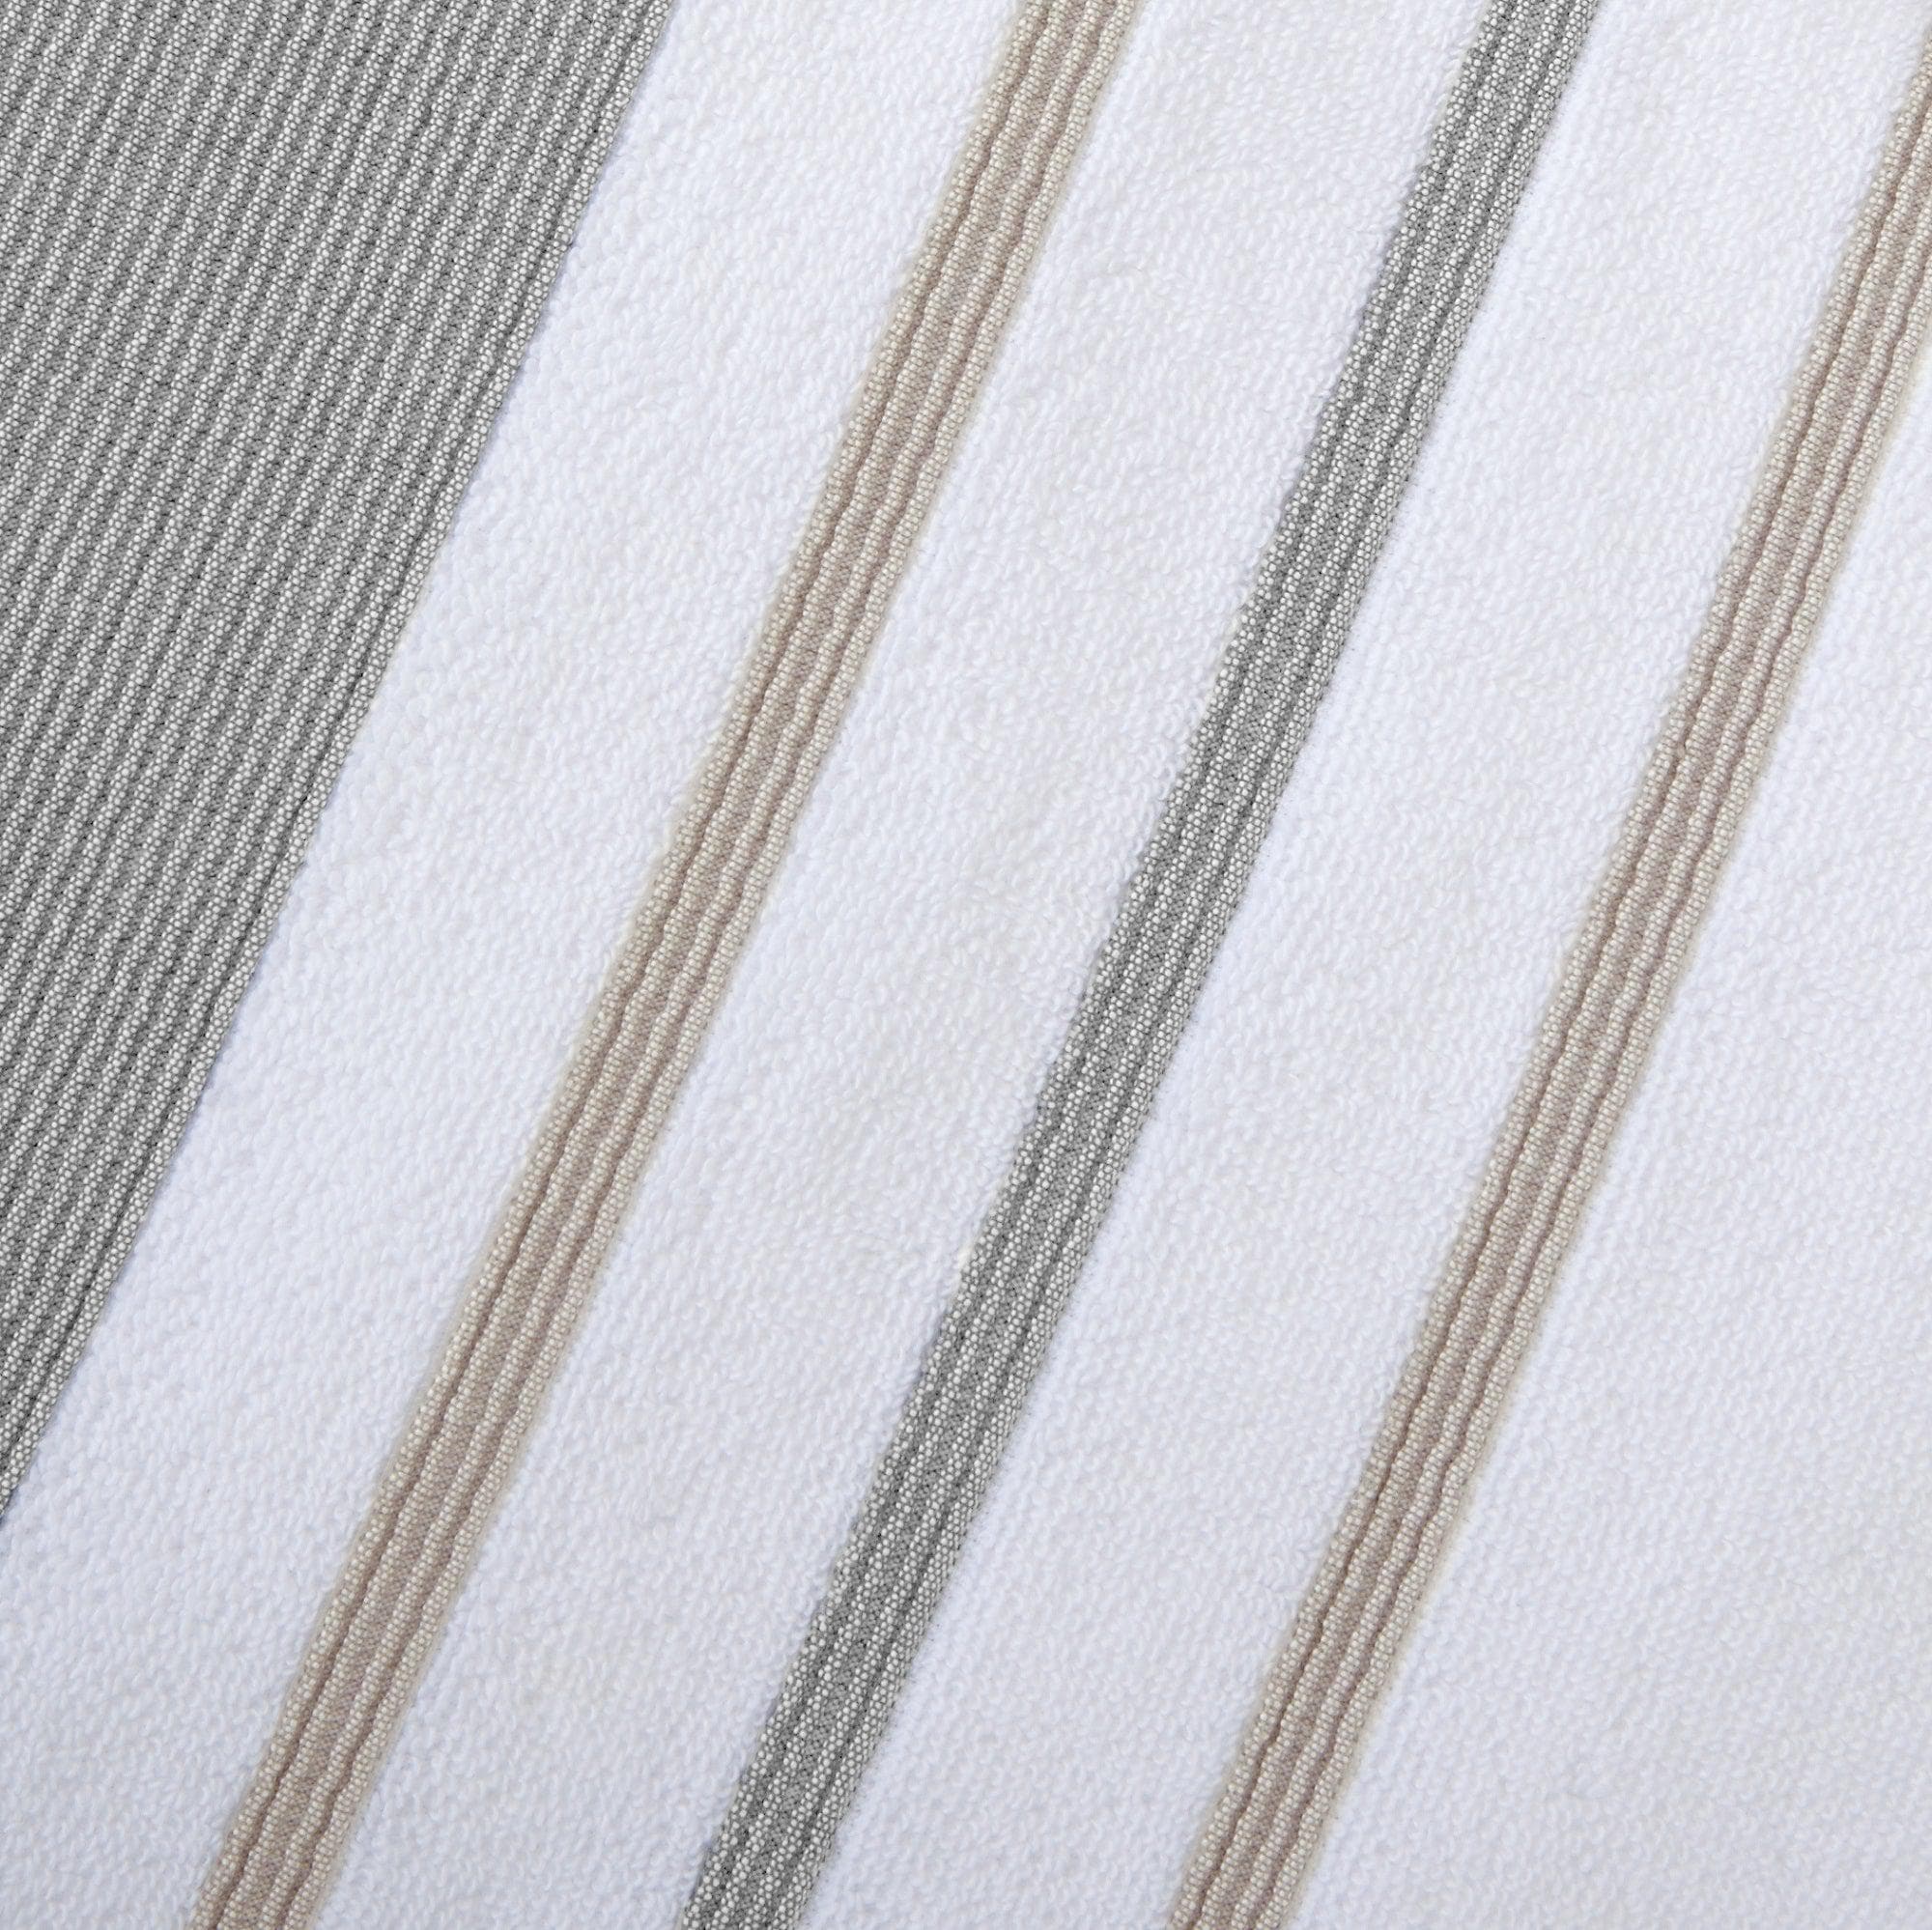 StyleWell Turkish Cotton White and Stone Gray Stripe 6-Piece